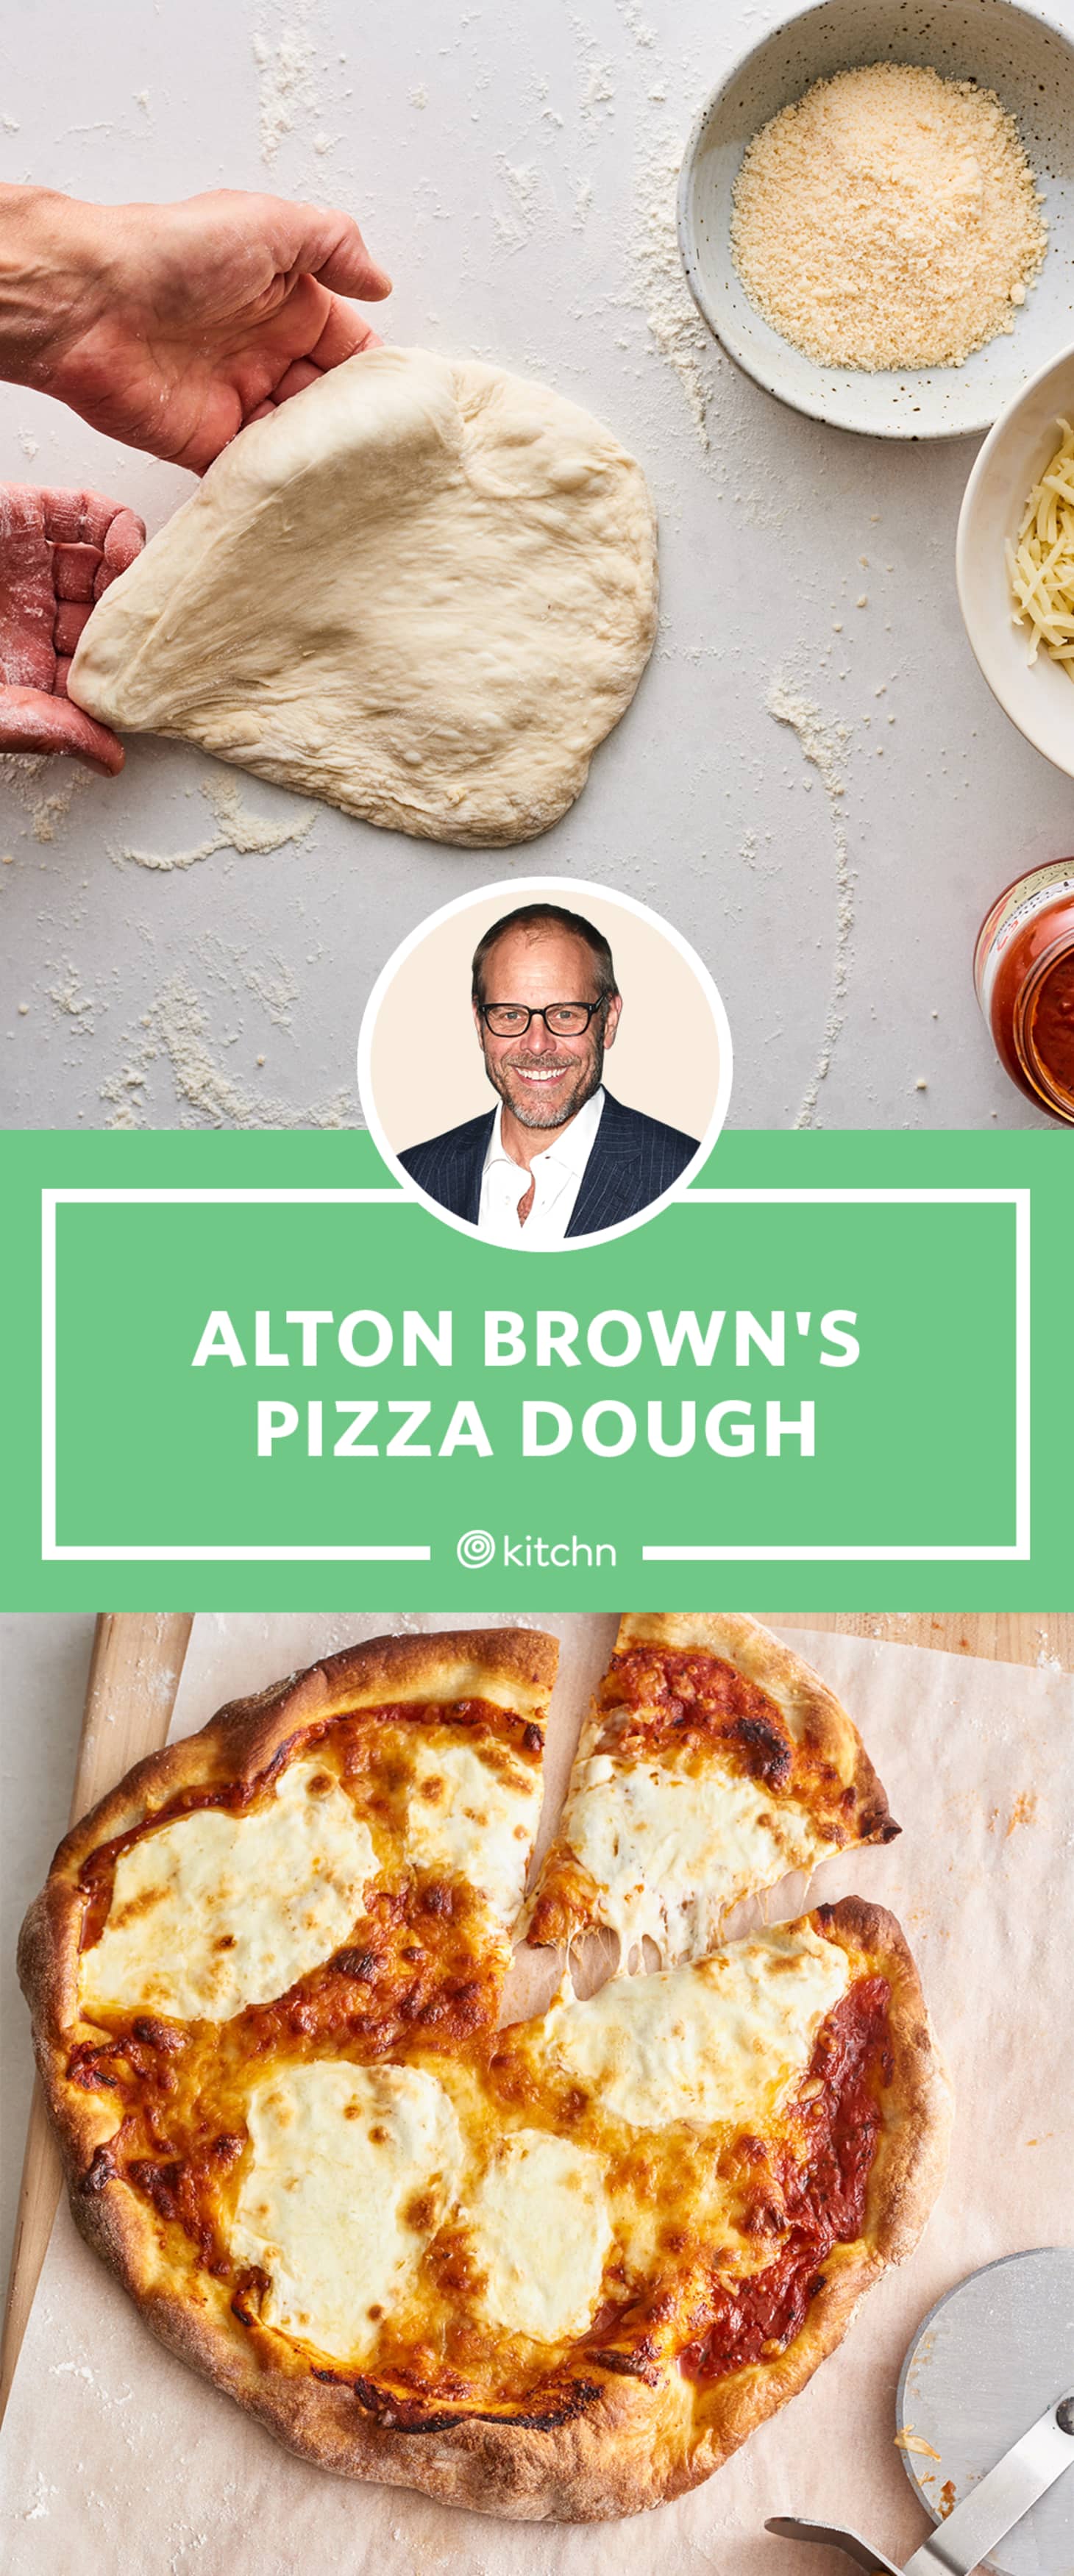 Alton Brown's Pizza Dough Recipe Review | Kitchn